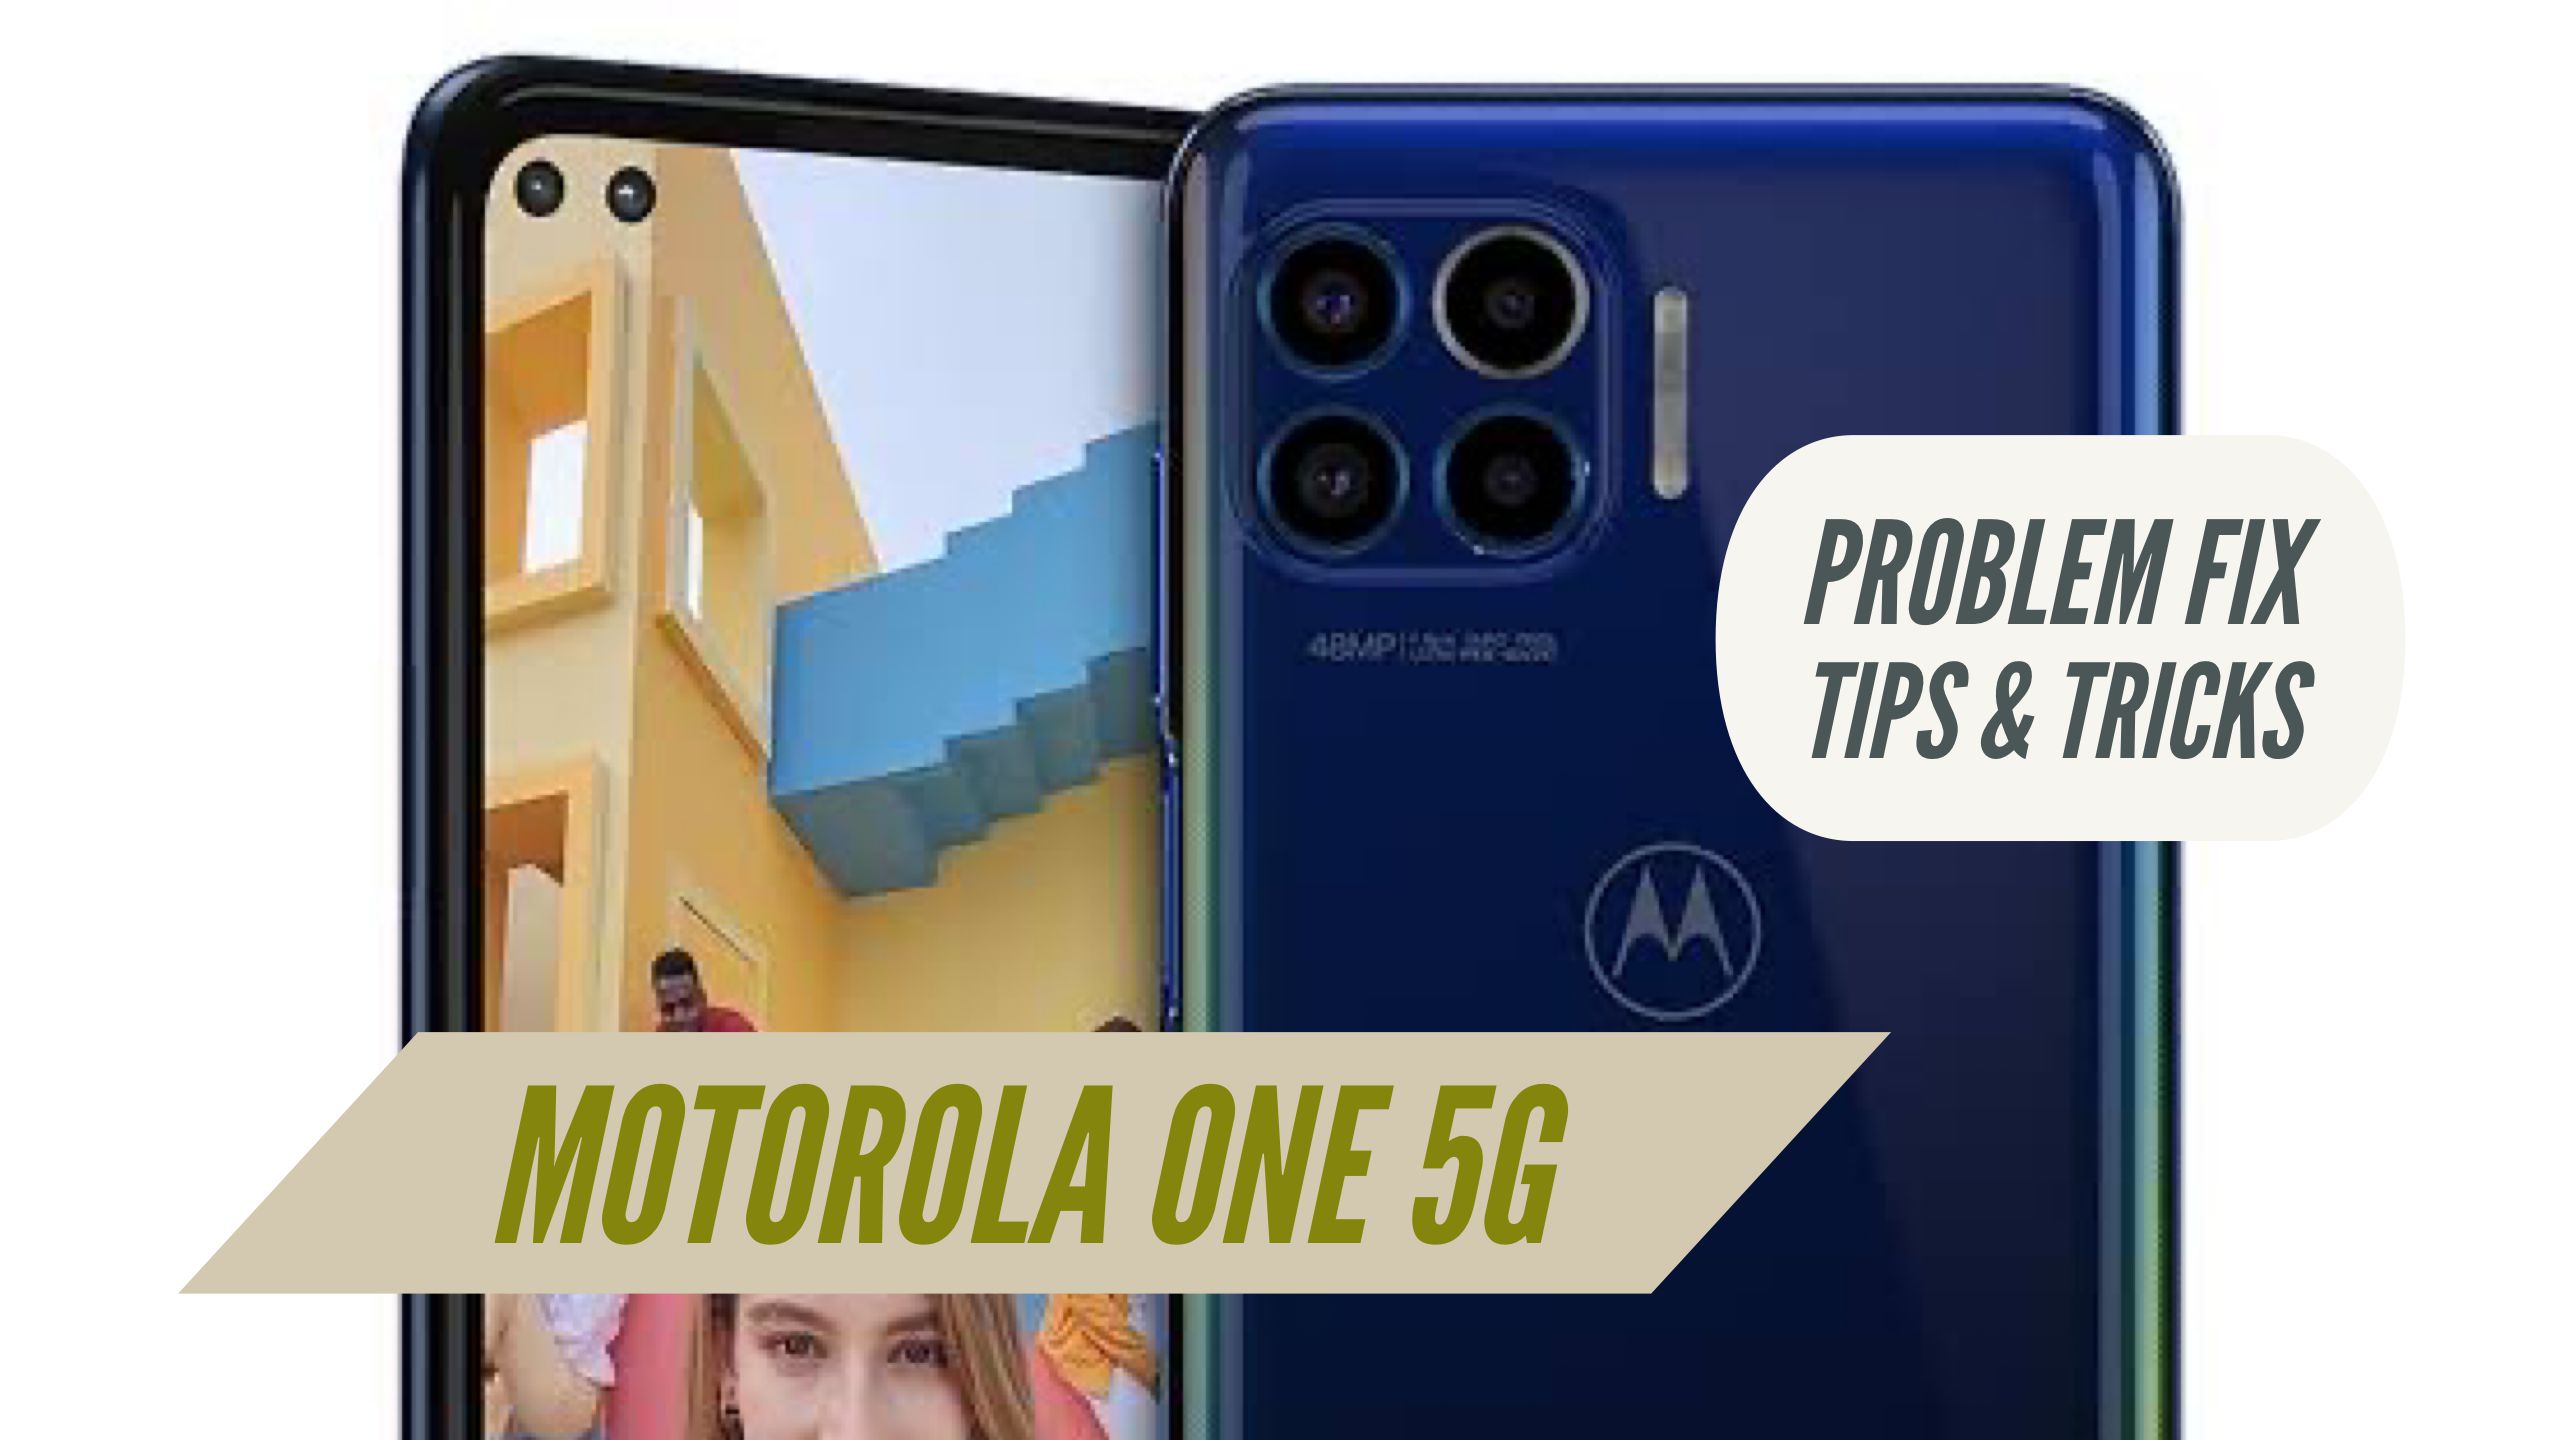 Motorola One 5G Problem Fix Issues Solution TIPS & TRICKS